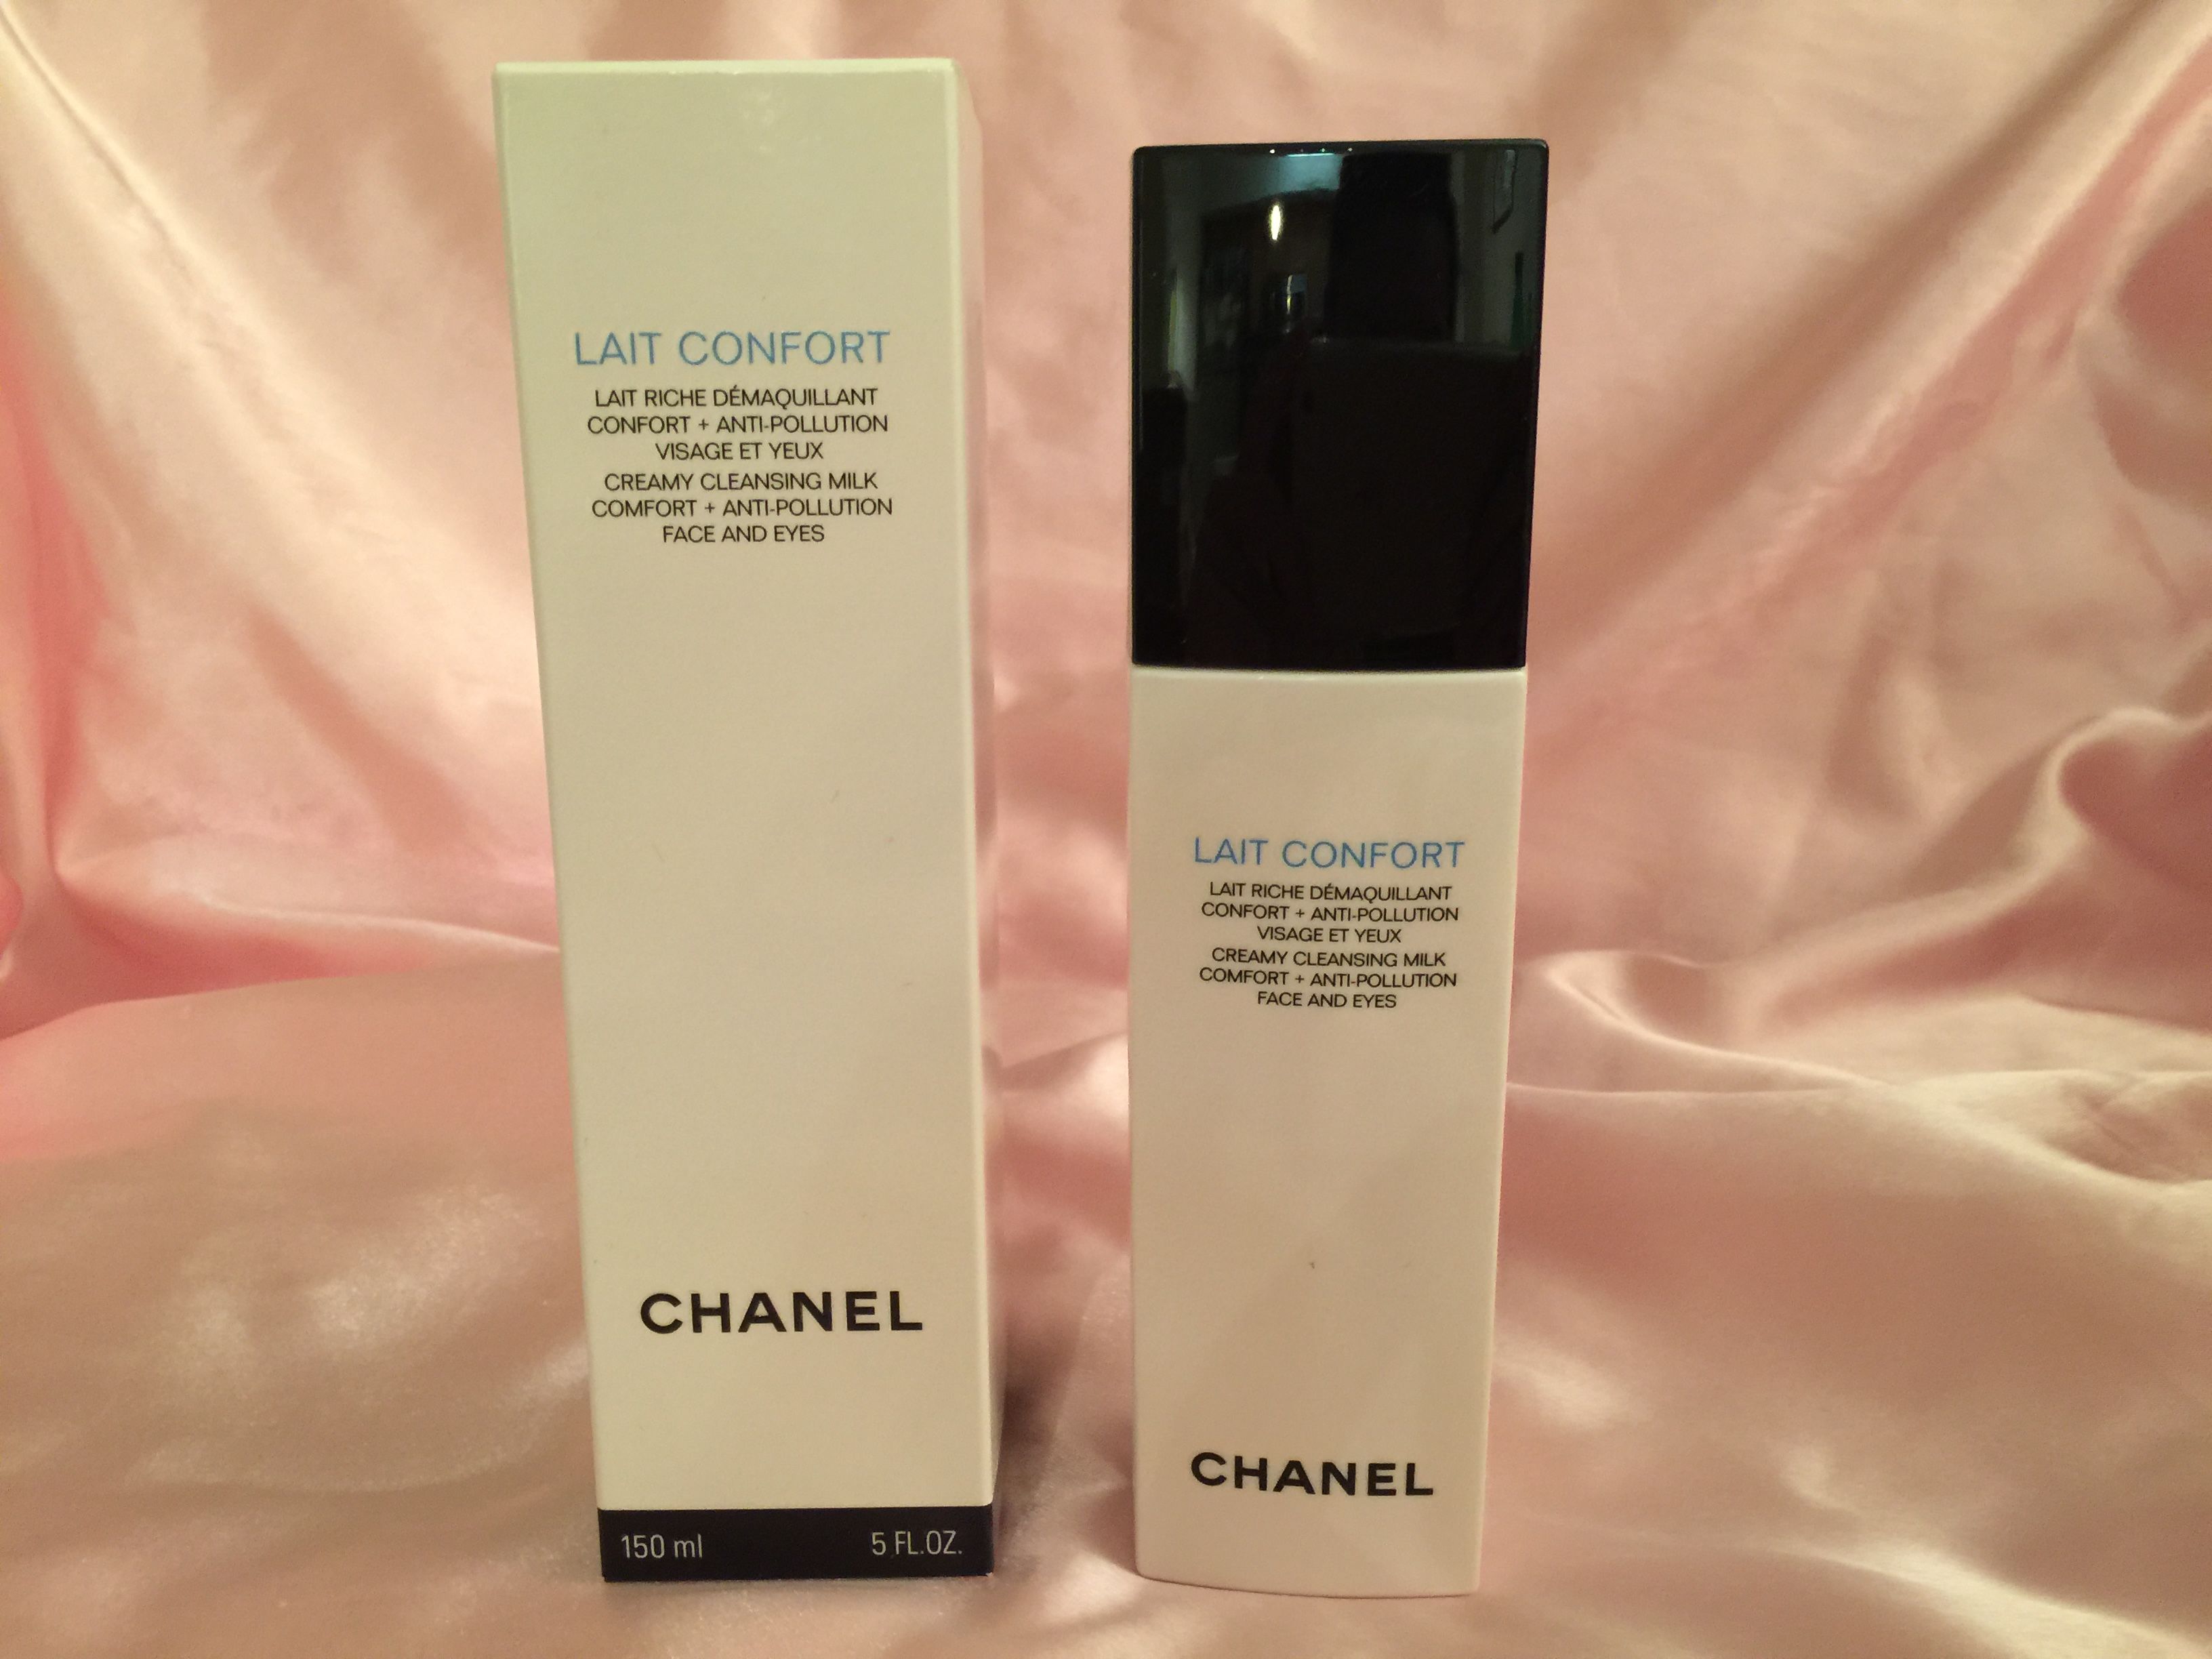 Chanel Lait Confort Cream Cleansing Milk Comfort + Anti-Pollution